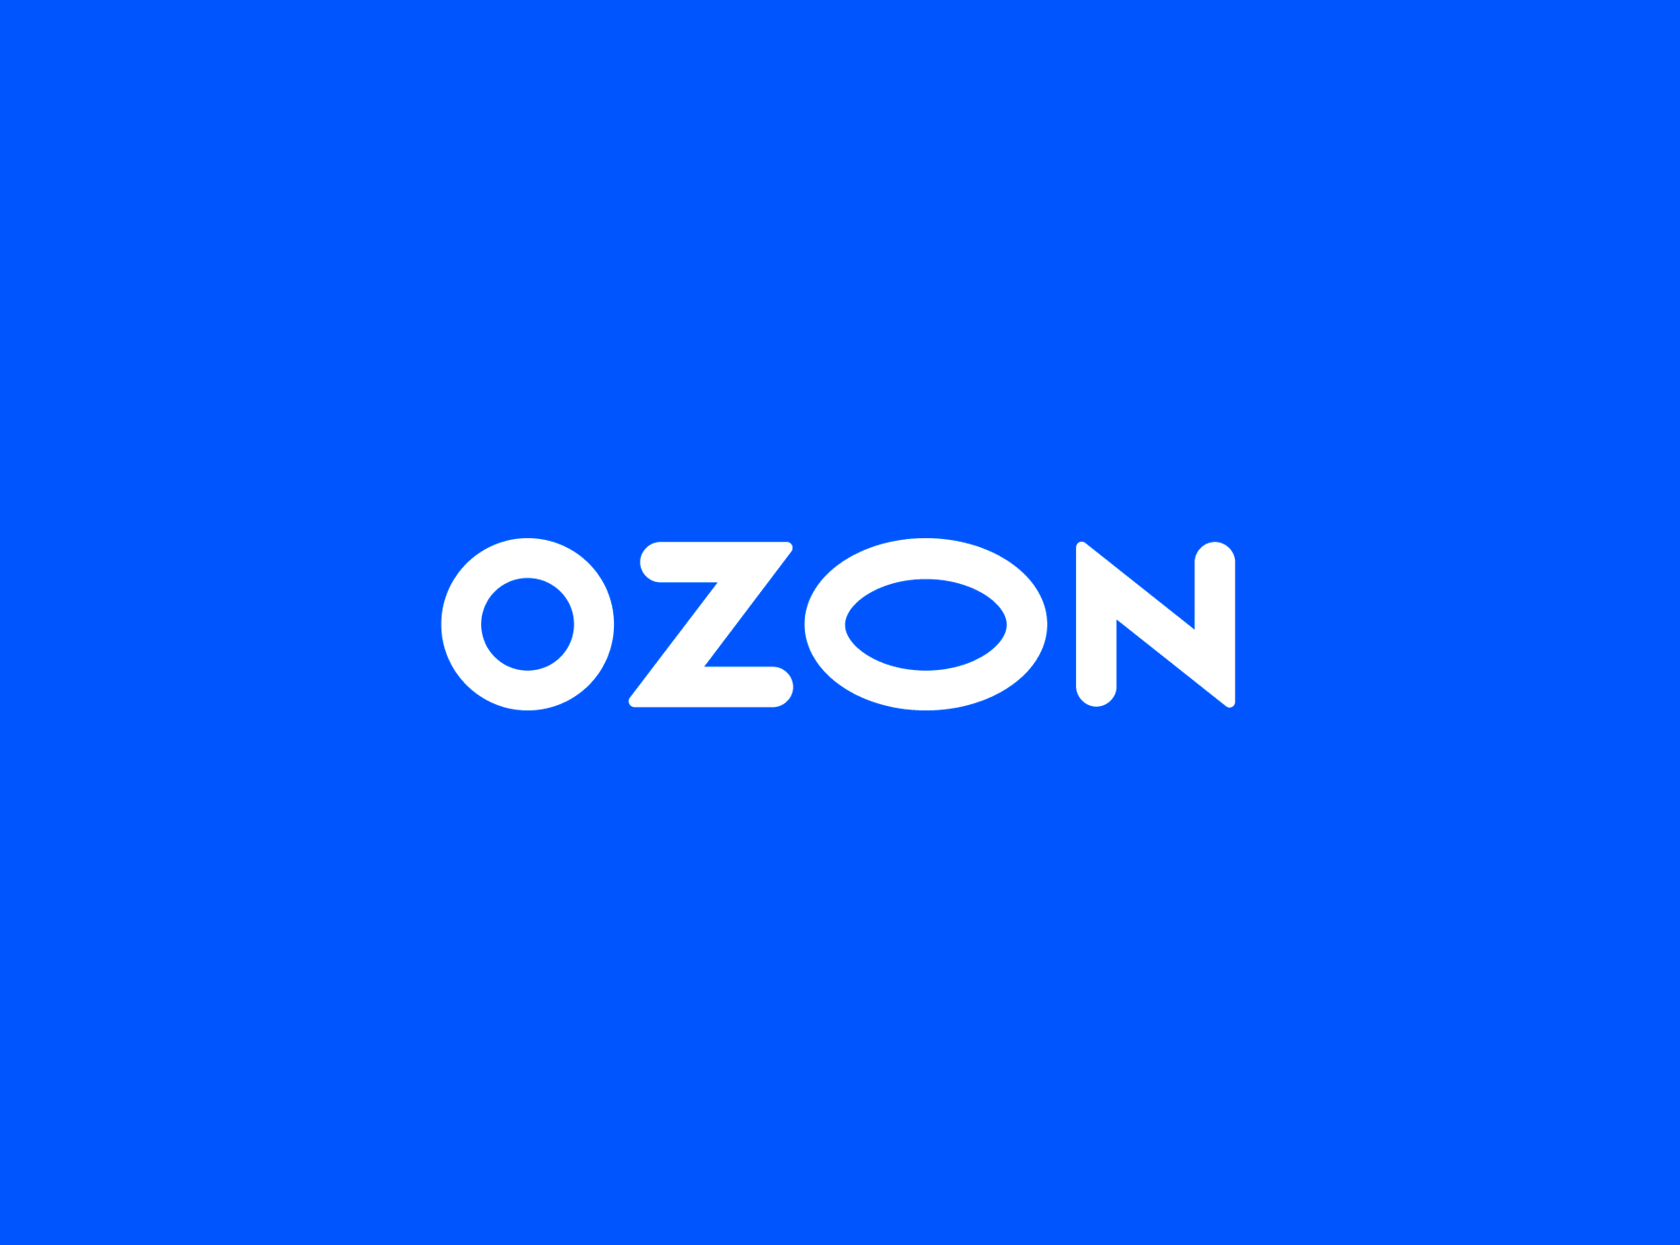 Озон картинка логотип. OZON. Озон заставка. OZON эмблема. Логотип Озон фото.